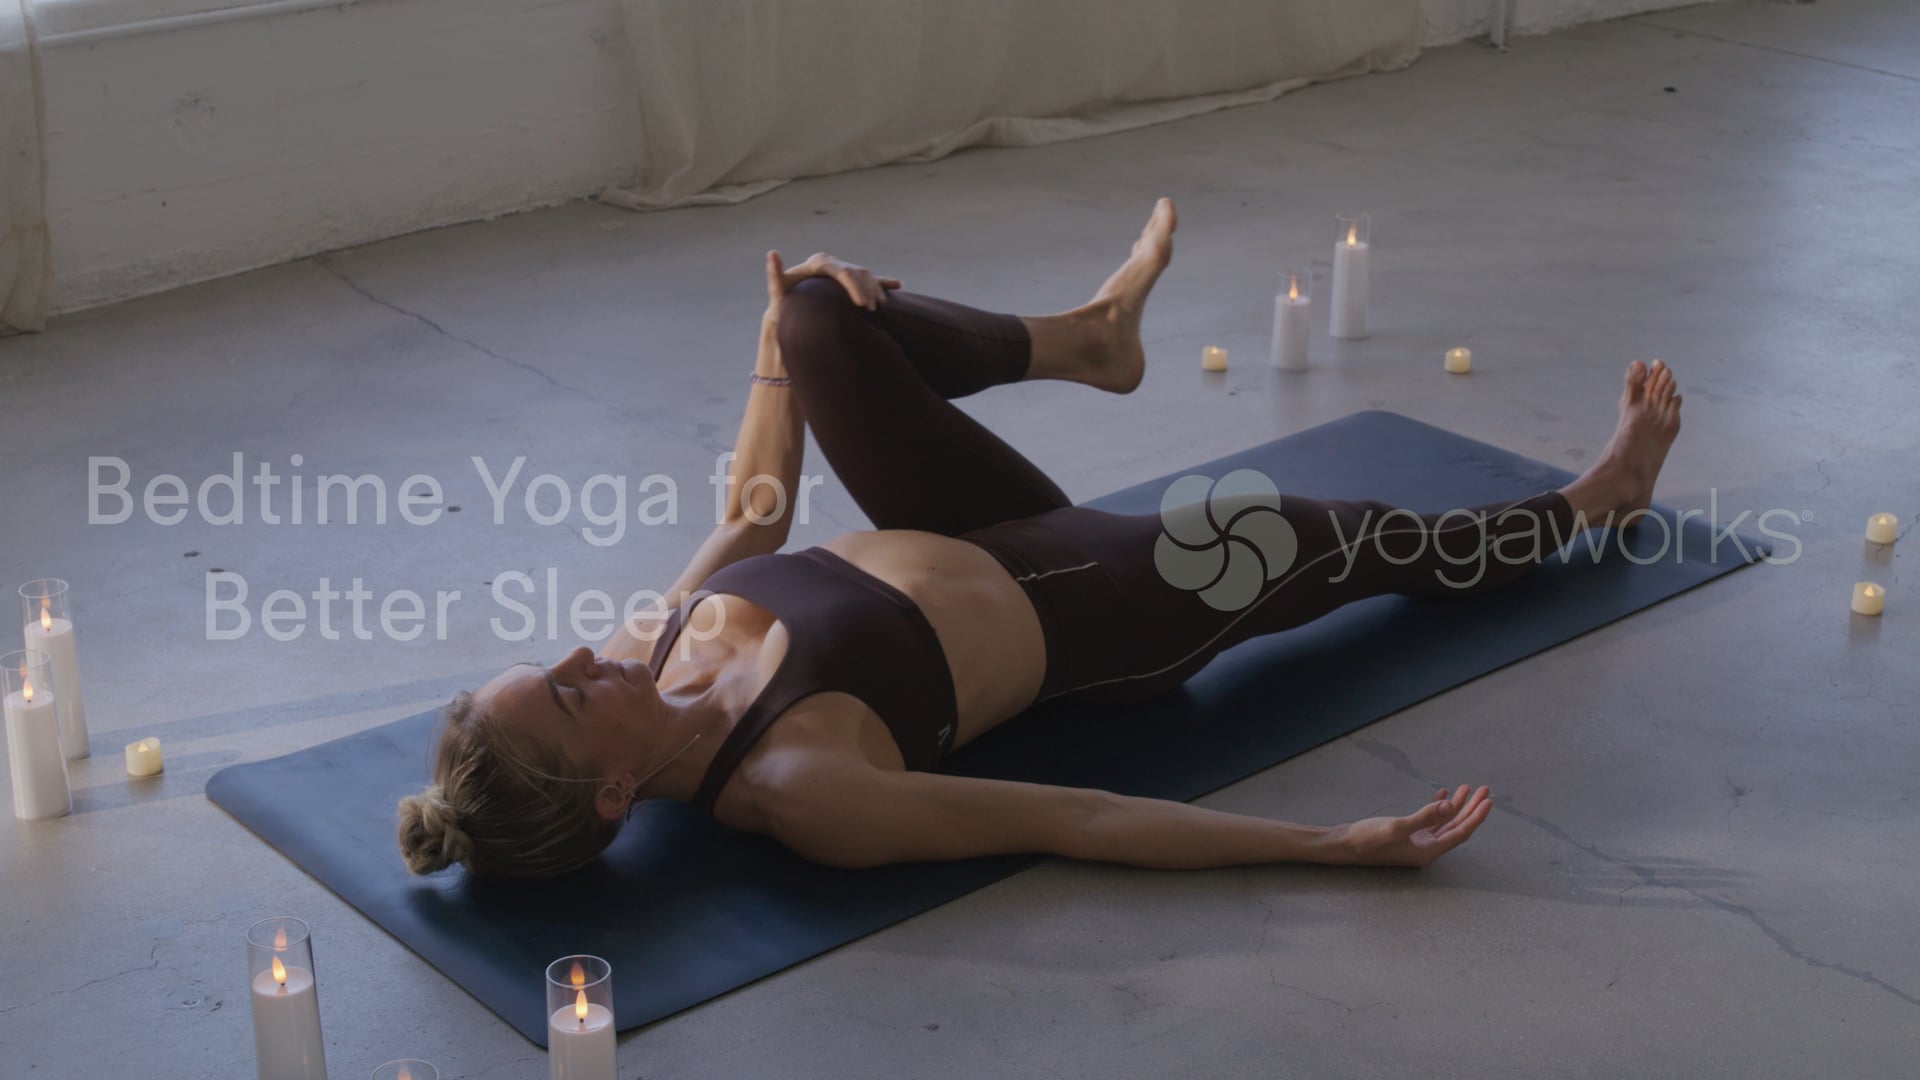 15 min Bedtime Yoga for Better Sleep w/ Maya